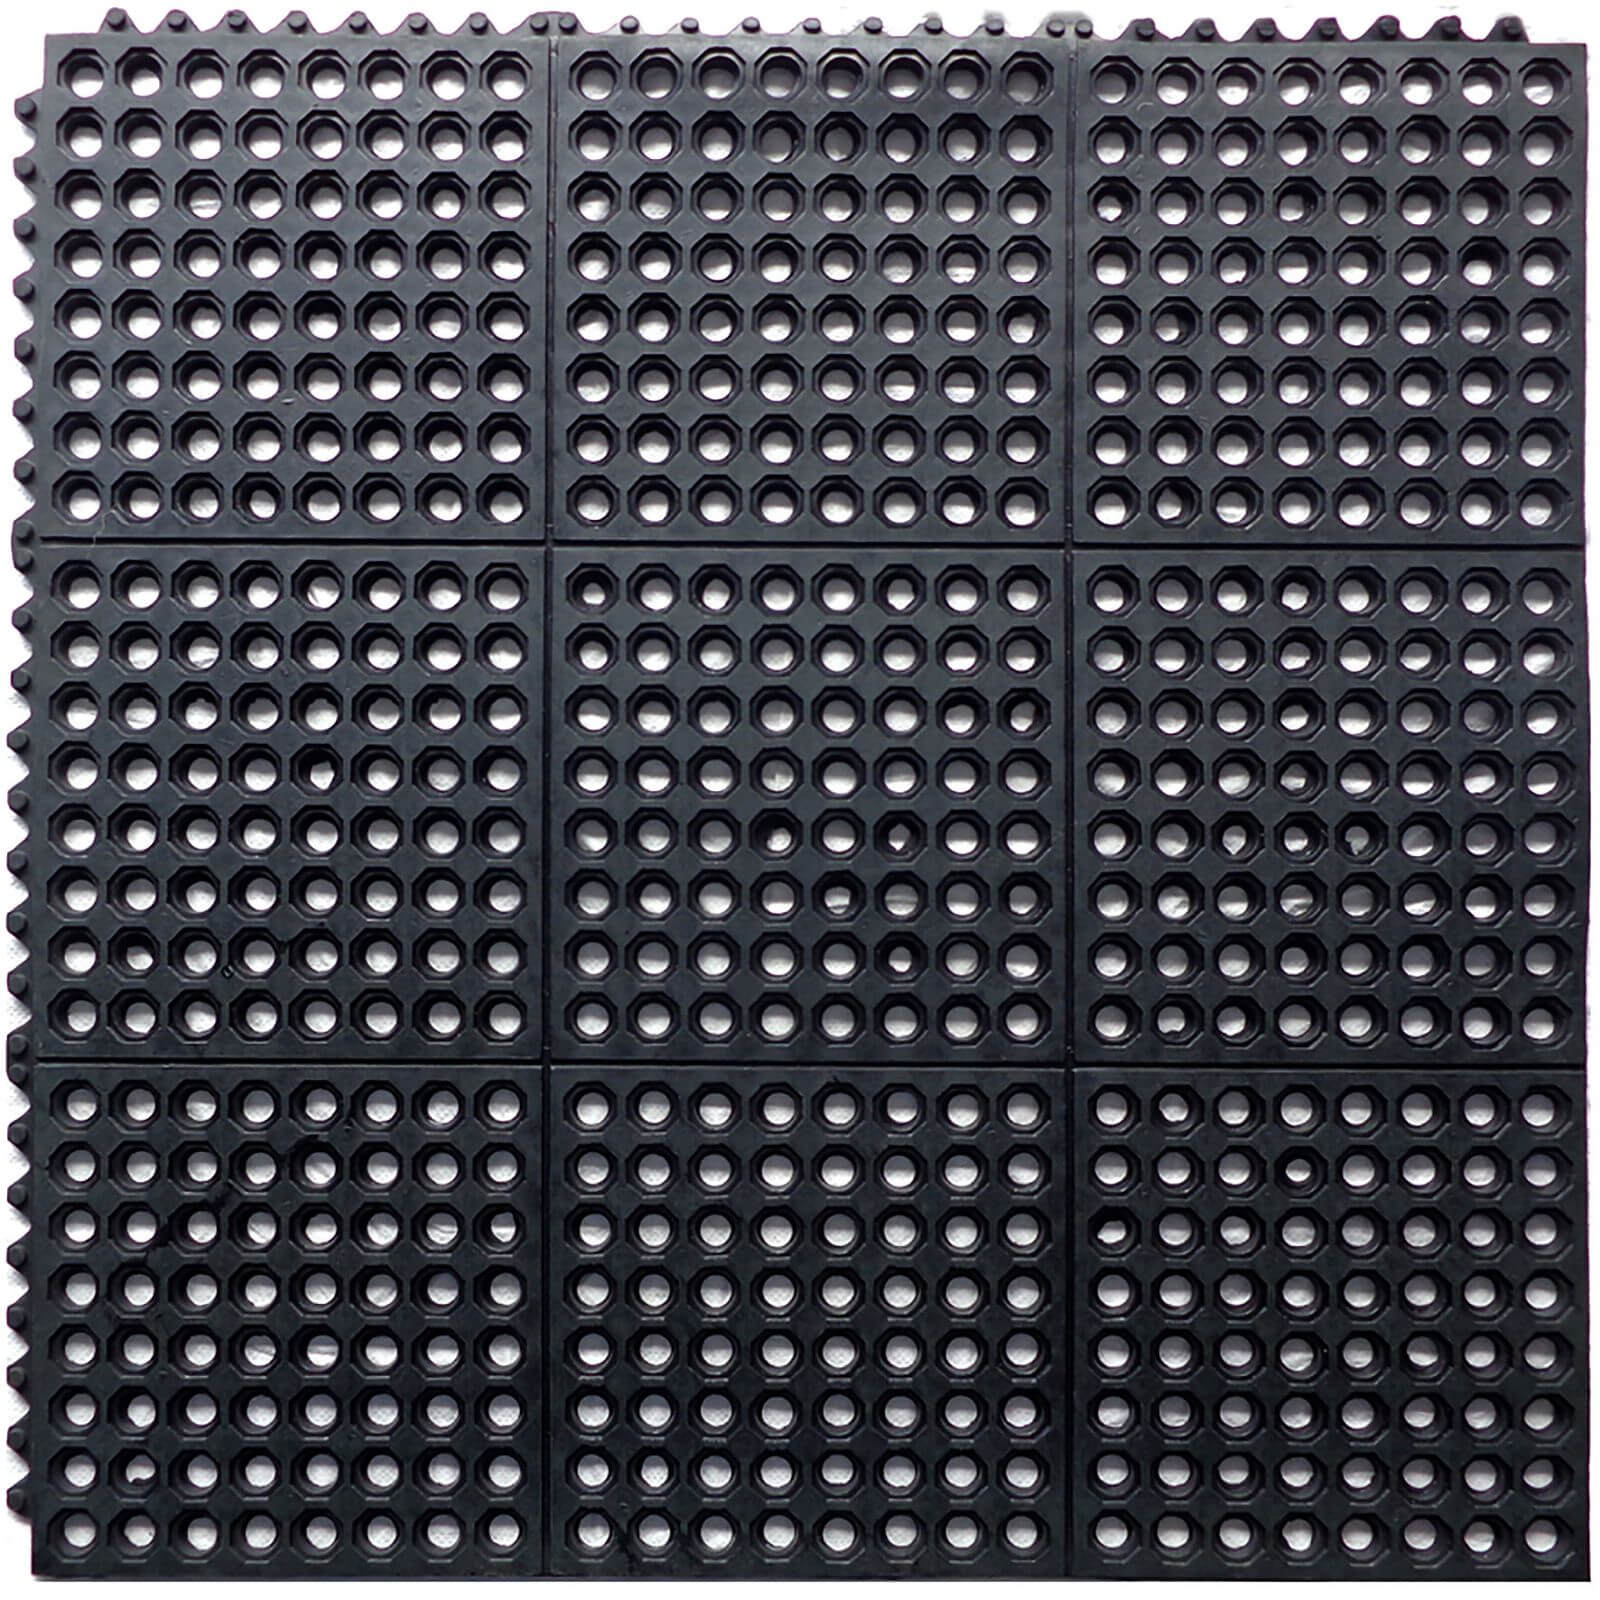 Photo of Rubber Interlocking Floor Mat - Black 90x90cm